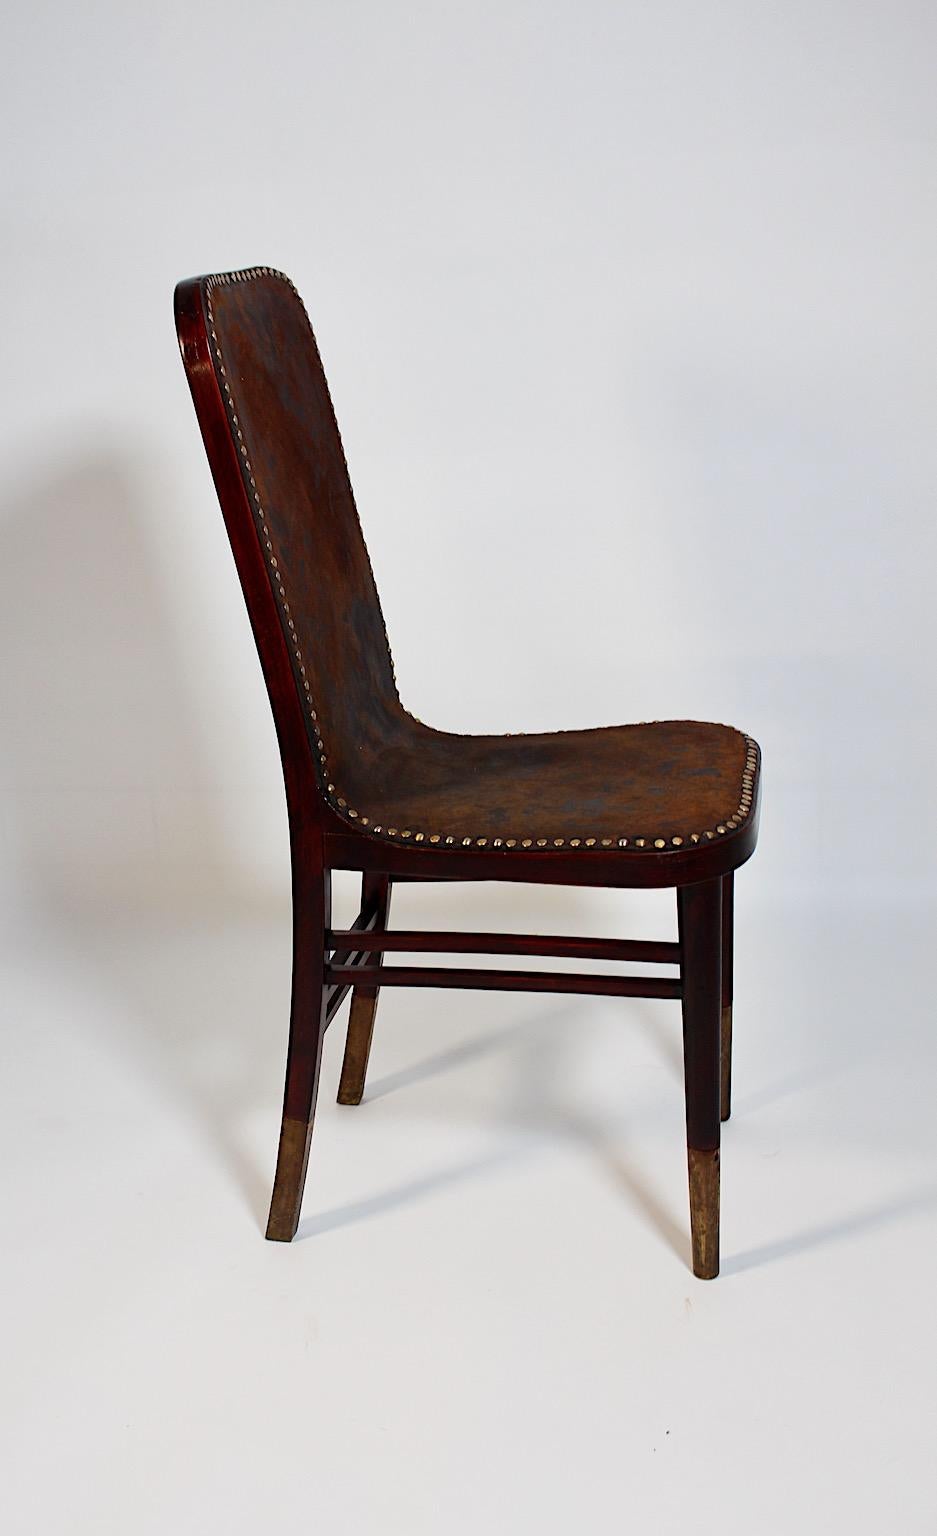 20th Century Jugendstil Side Chair Beech Leather by Joseph Urban Gebrüder Thonet 1903 Vienna For Sale